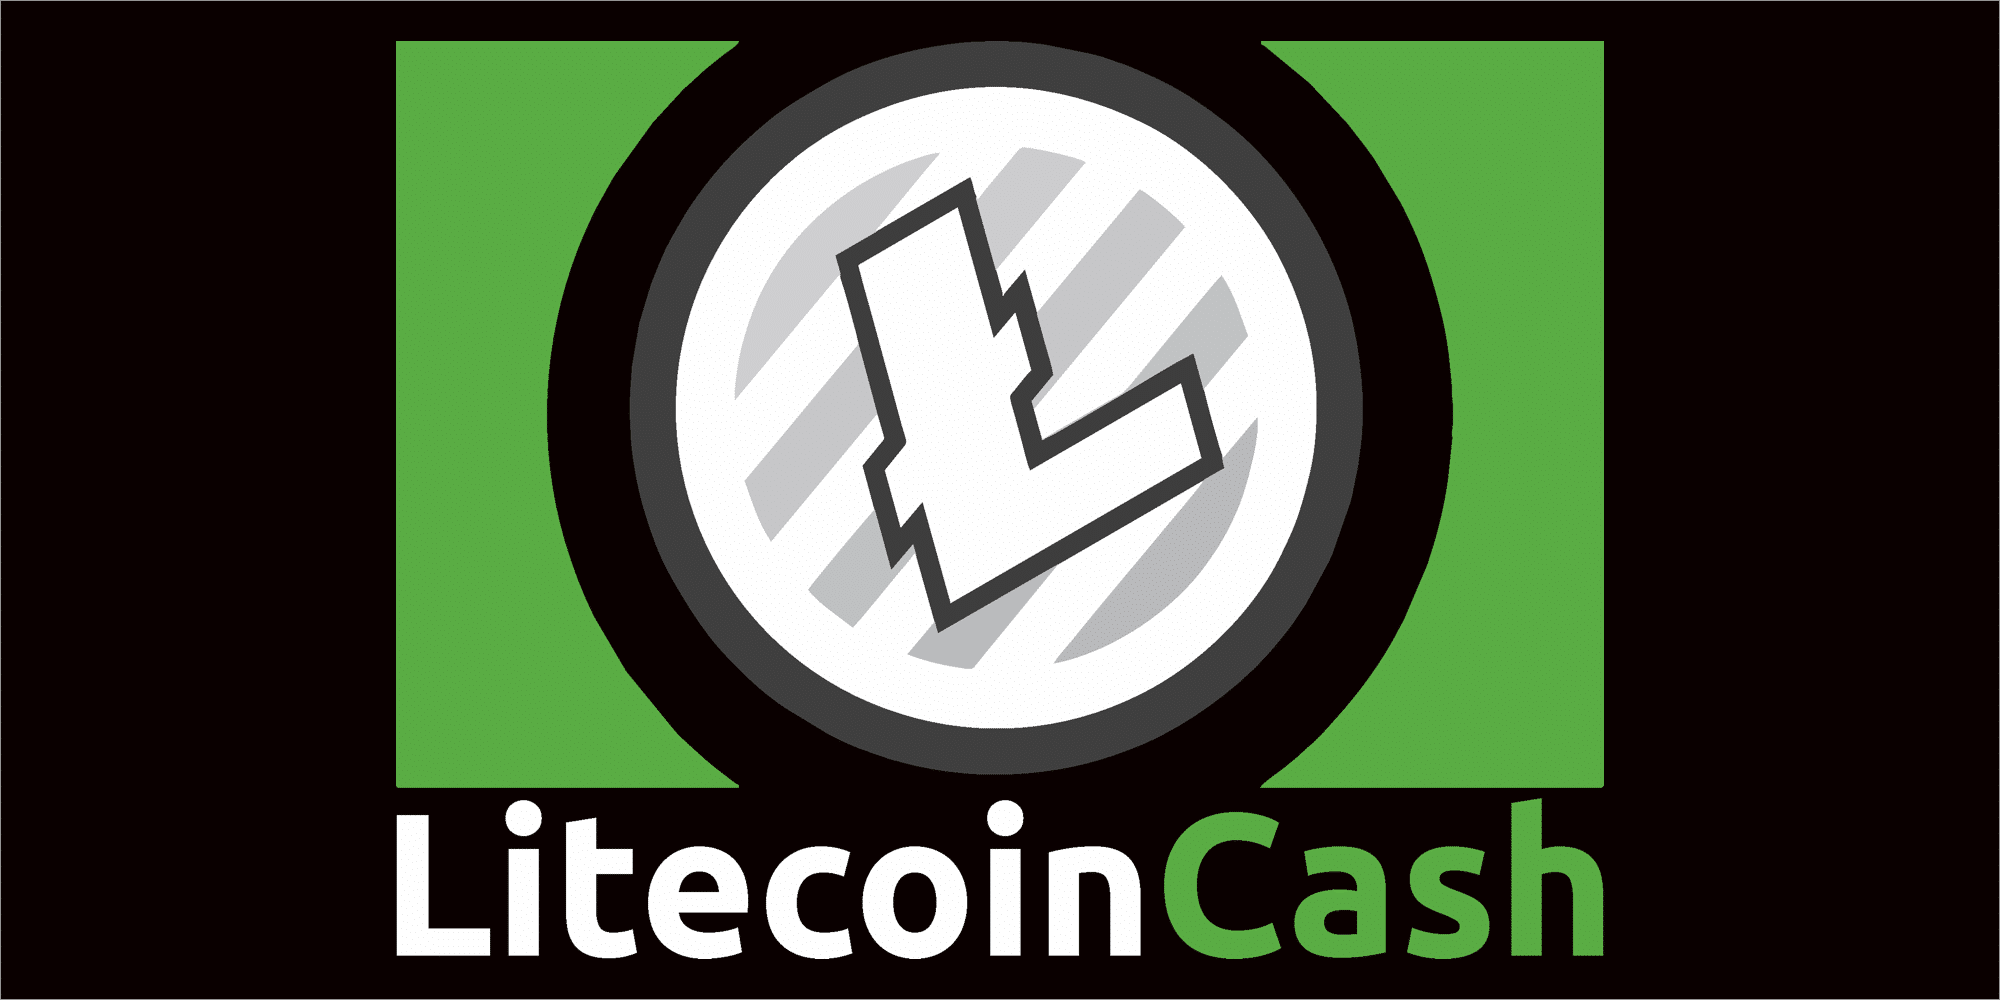 Litecoin cash address not working аппаратный кошелек для биткоина купить